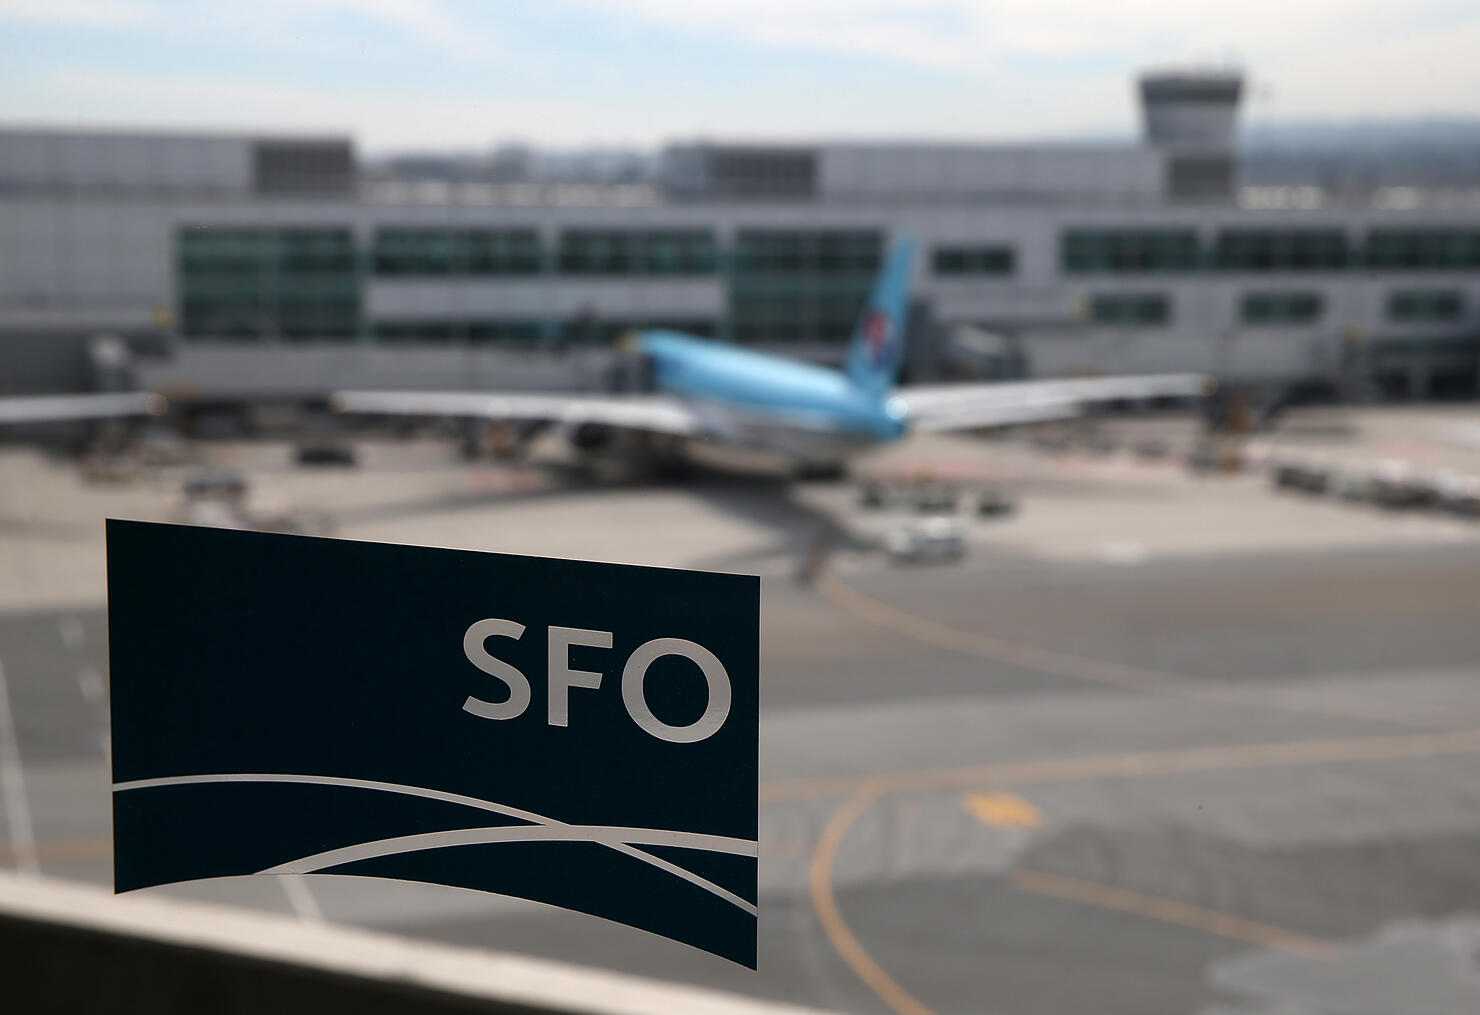 San Francisco International Airport Named Best In Customer Service